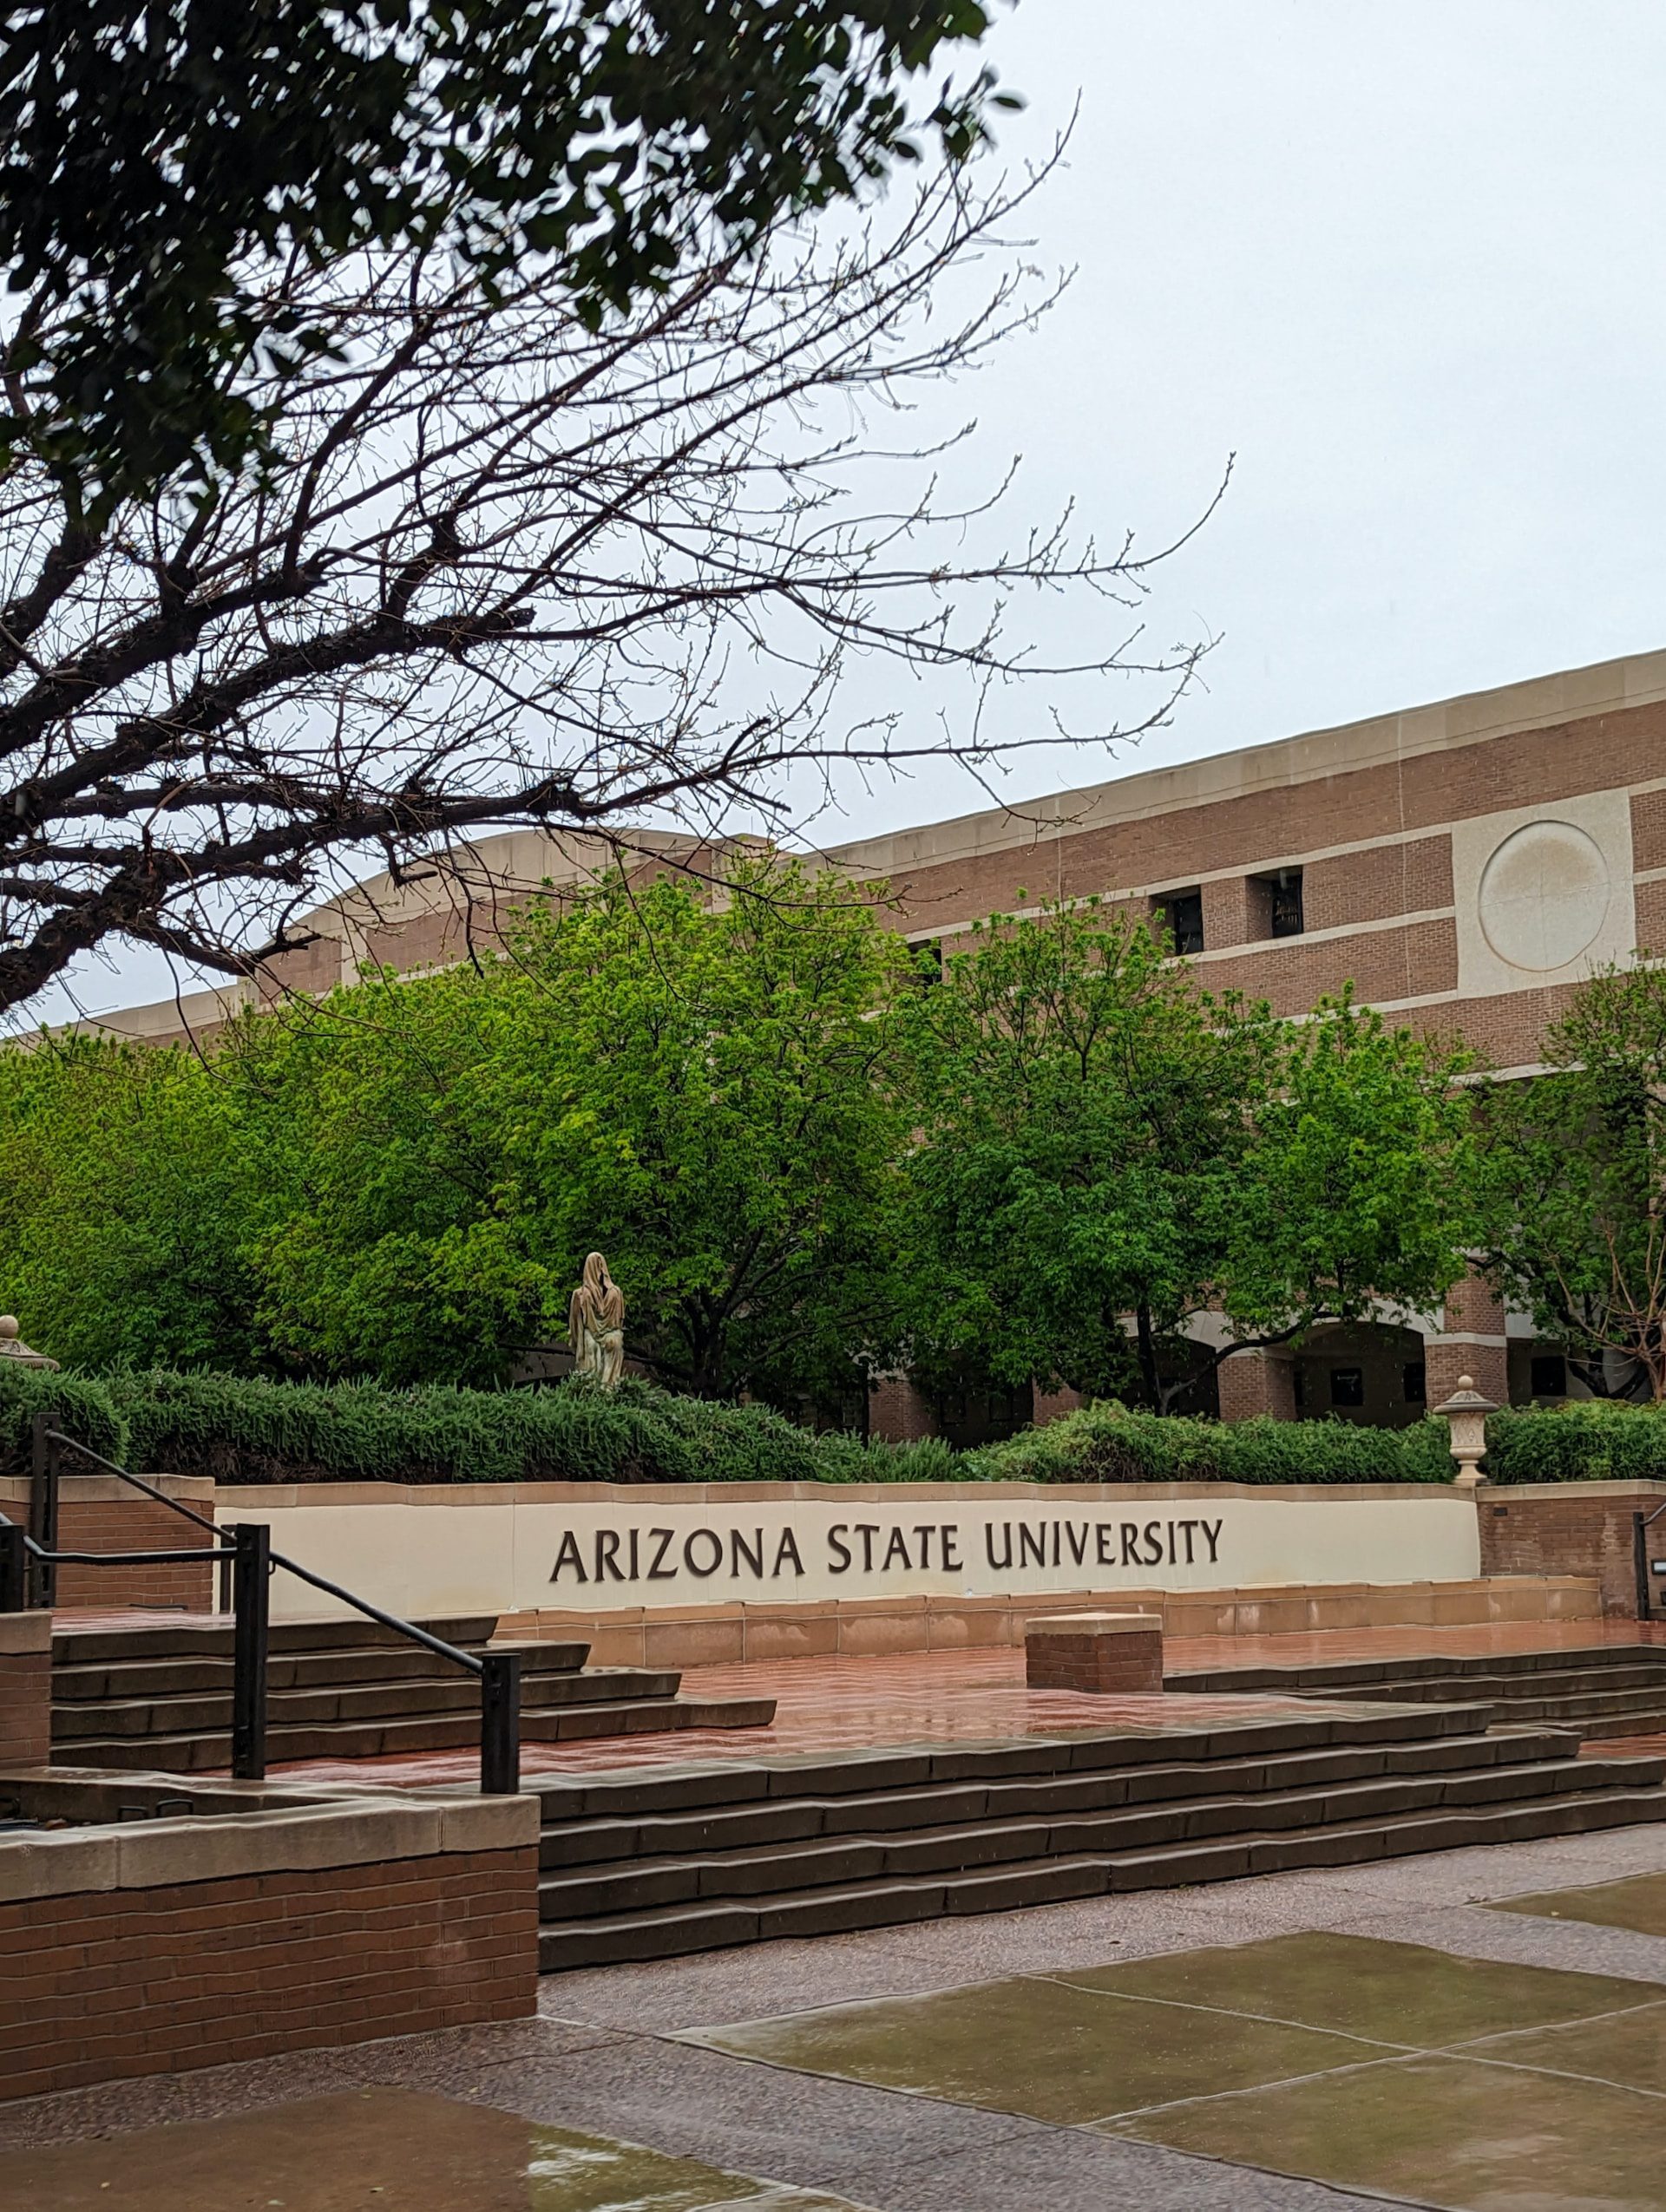 Arizona State University sign in Glendale, Arizona.